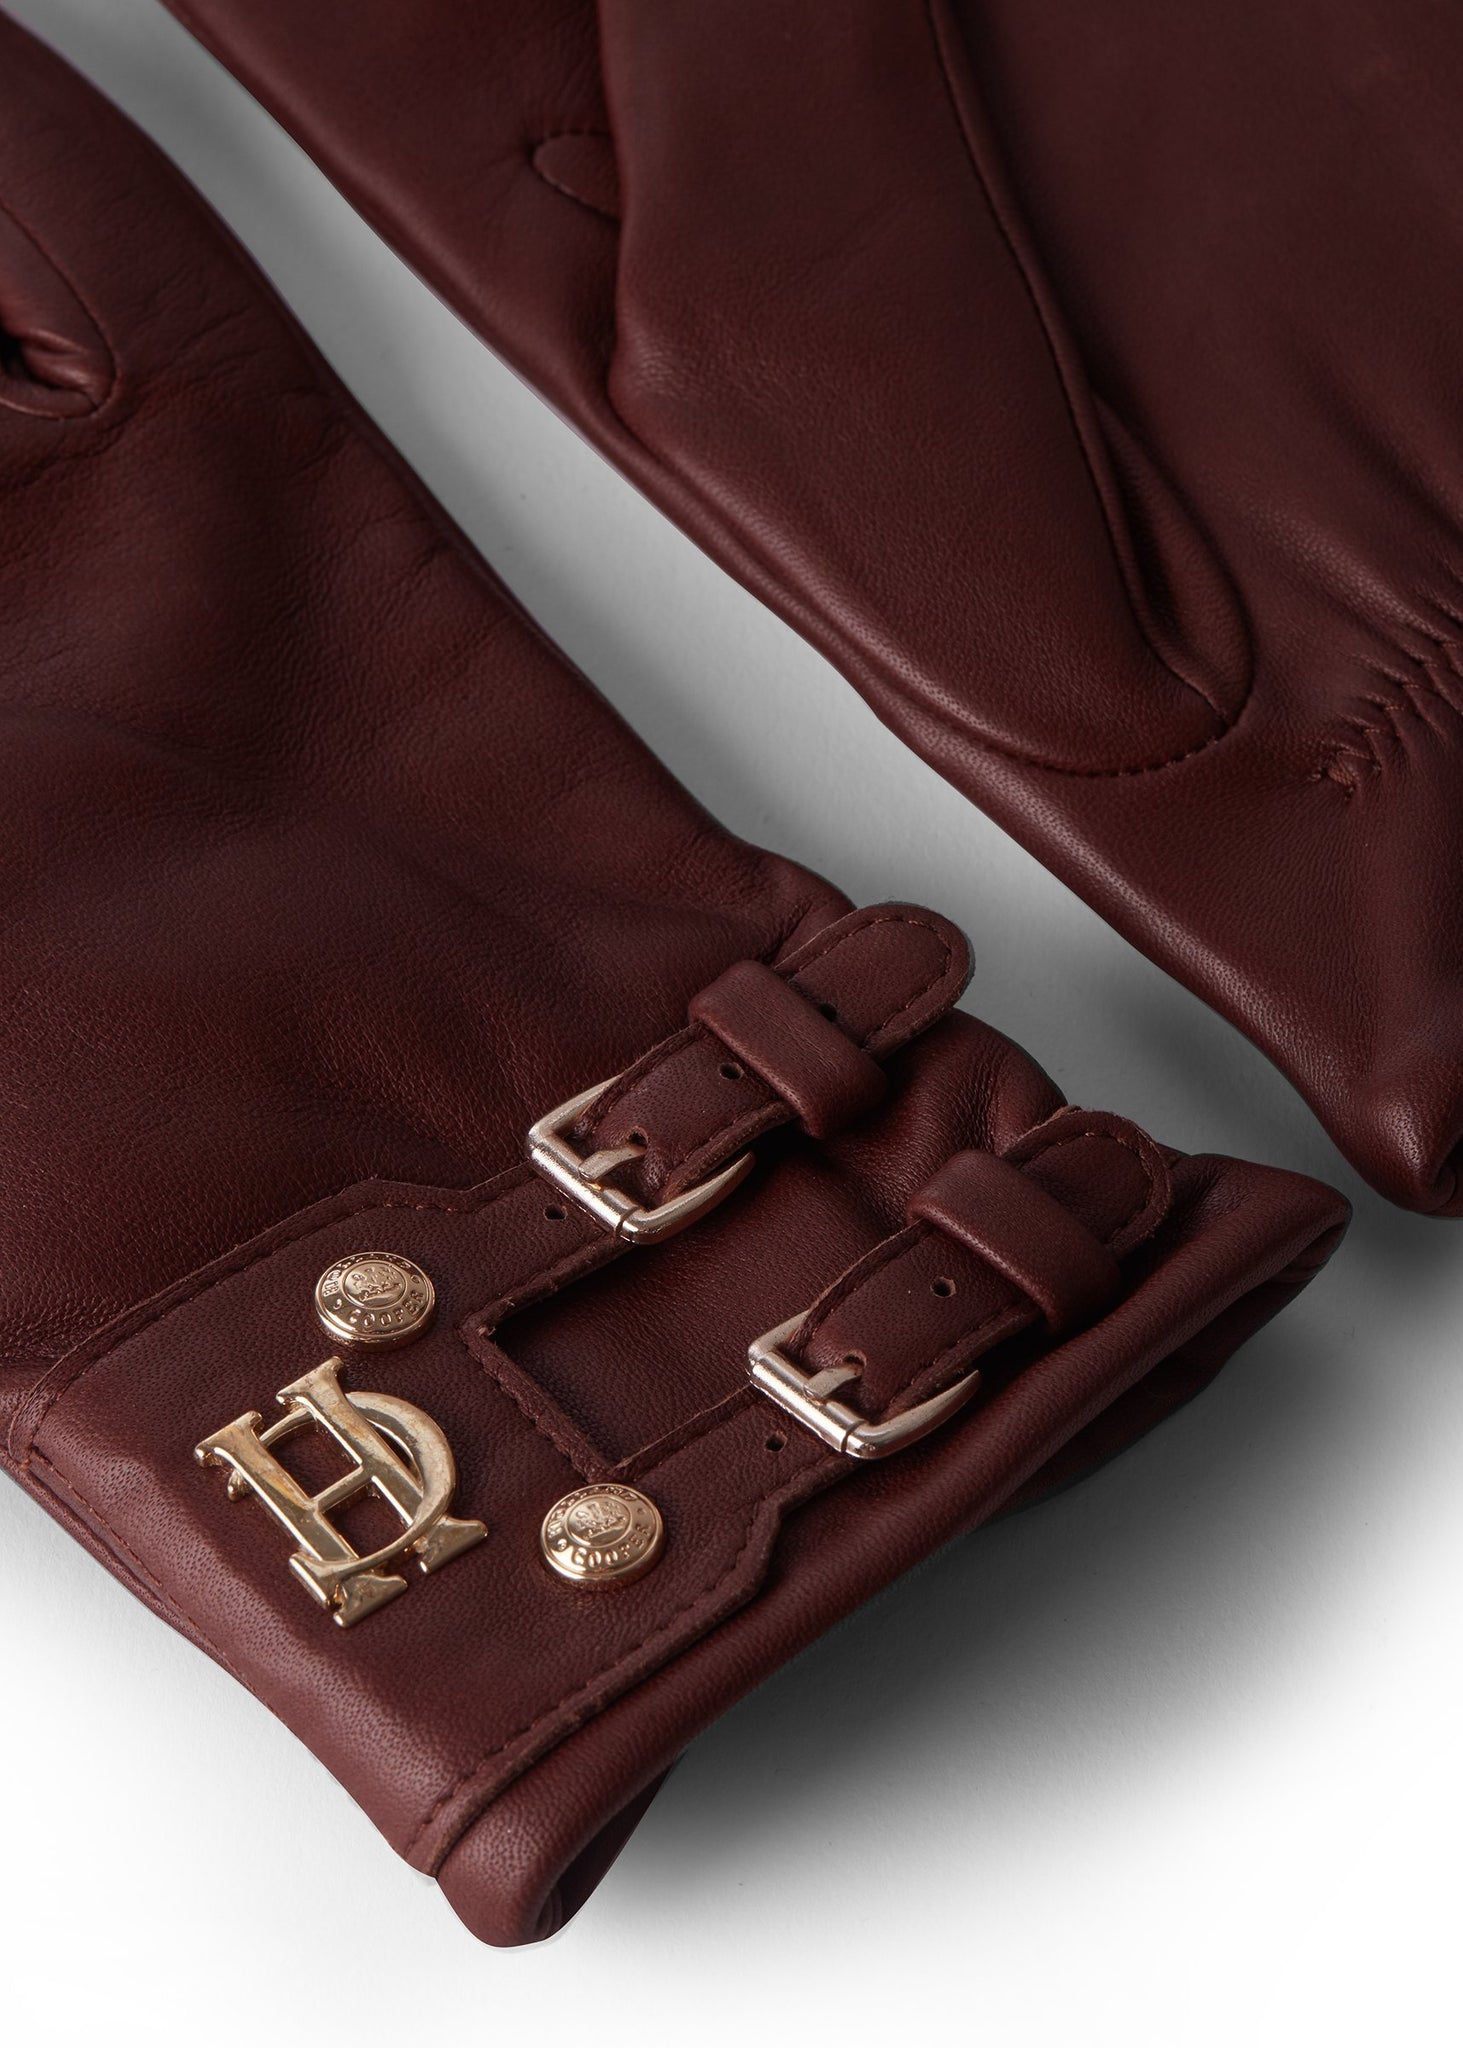 Monogram Leather Gloves (Chocolate)